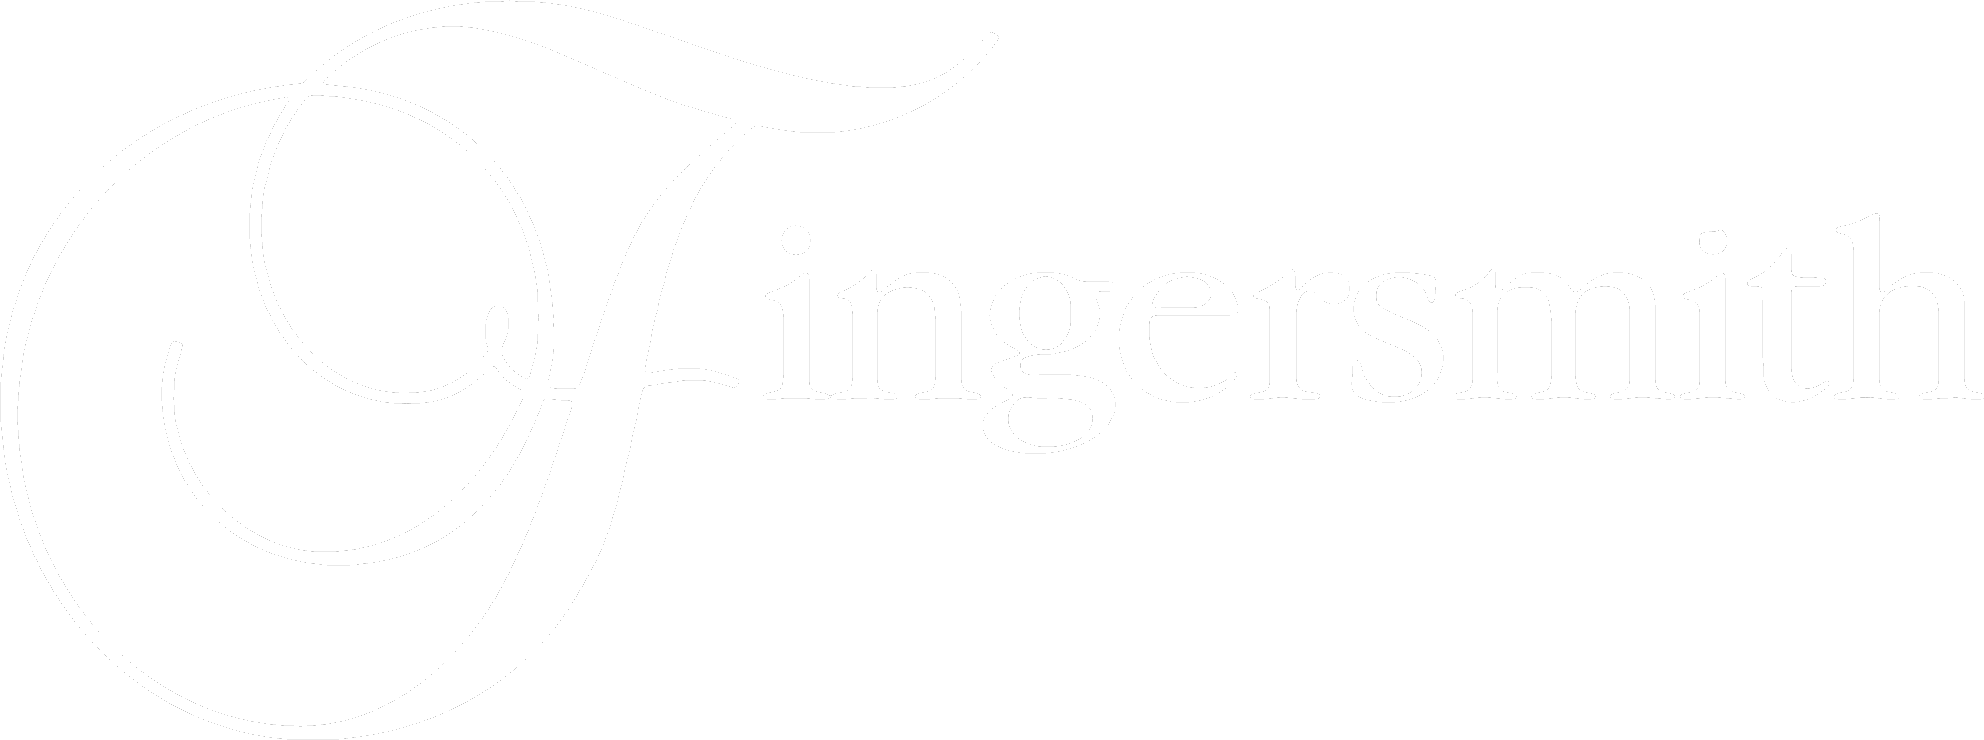 Fingersmith logo